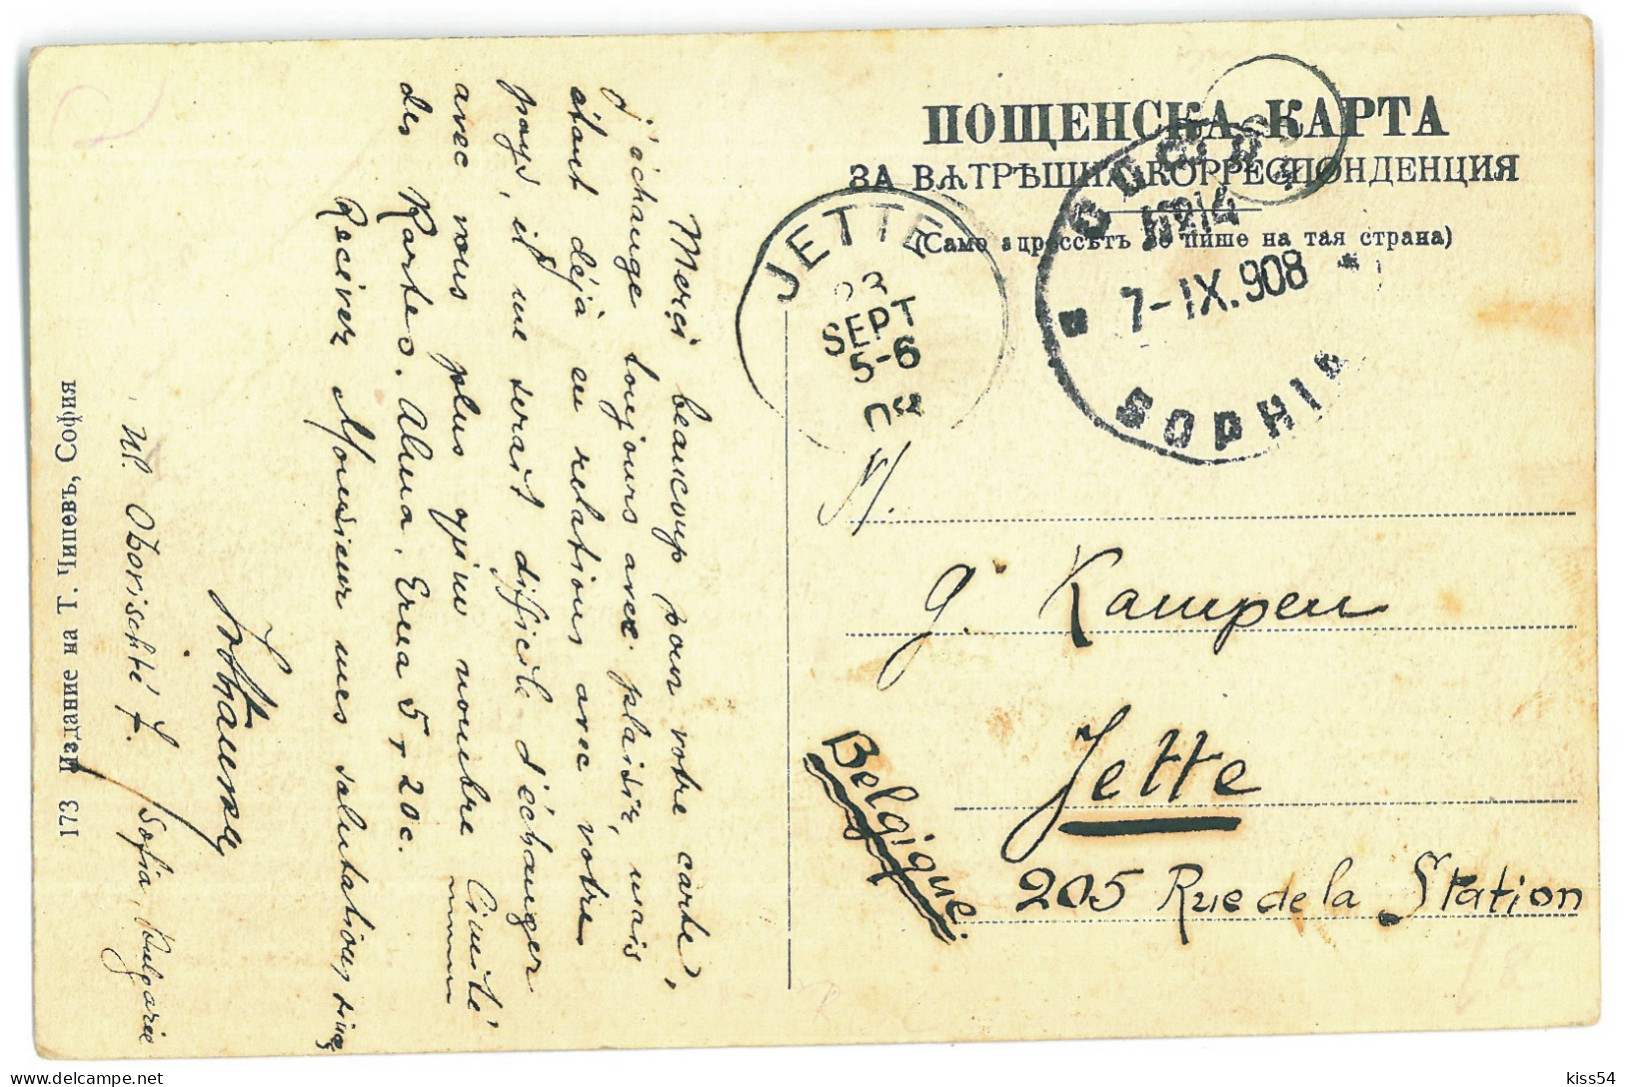 BUL 09 - 23471 SOFIA, Street Stores, Bulgaria - Old Postcard - Used - 1908 - TCV - Bulgaria